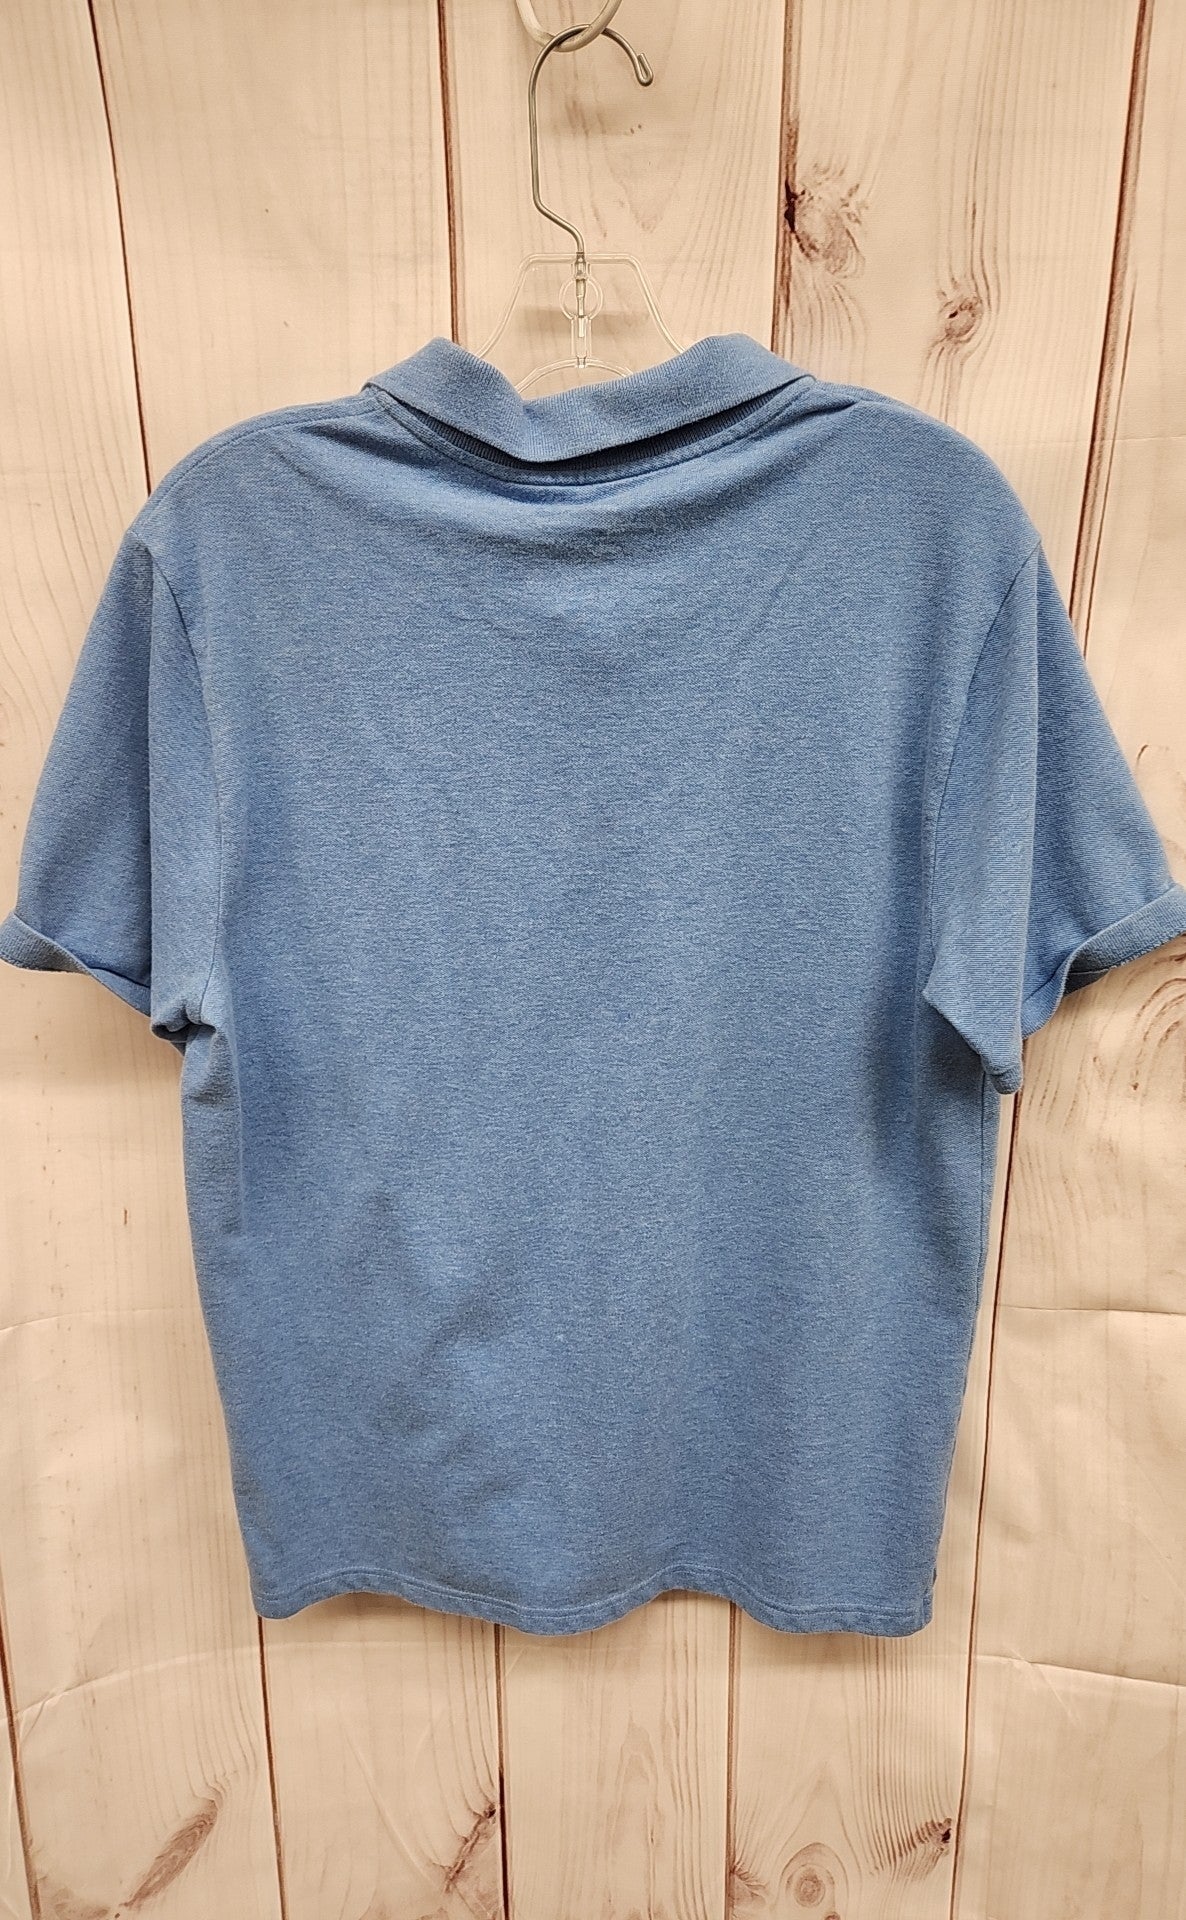 Vineyard Vines Men's Size S Blue Shirt